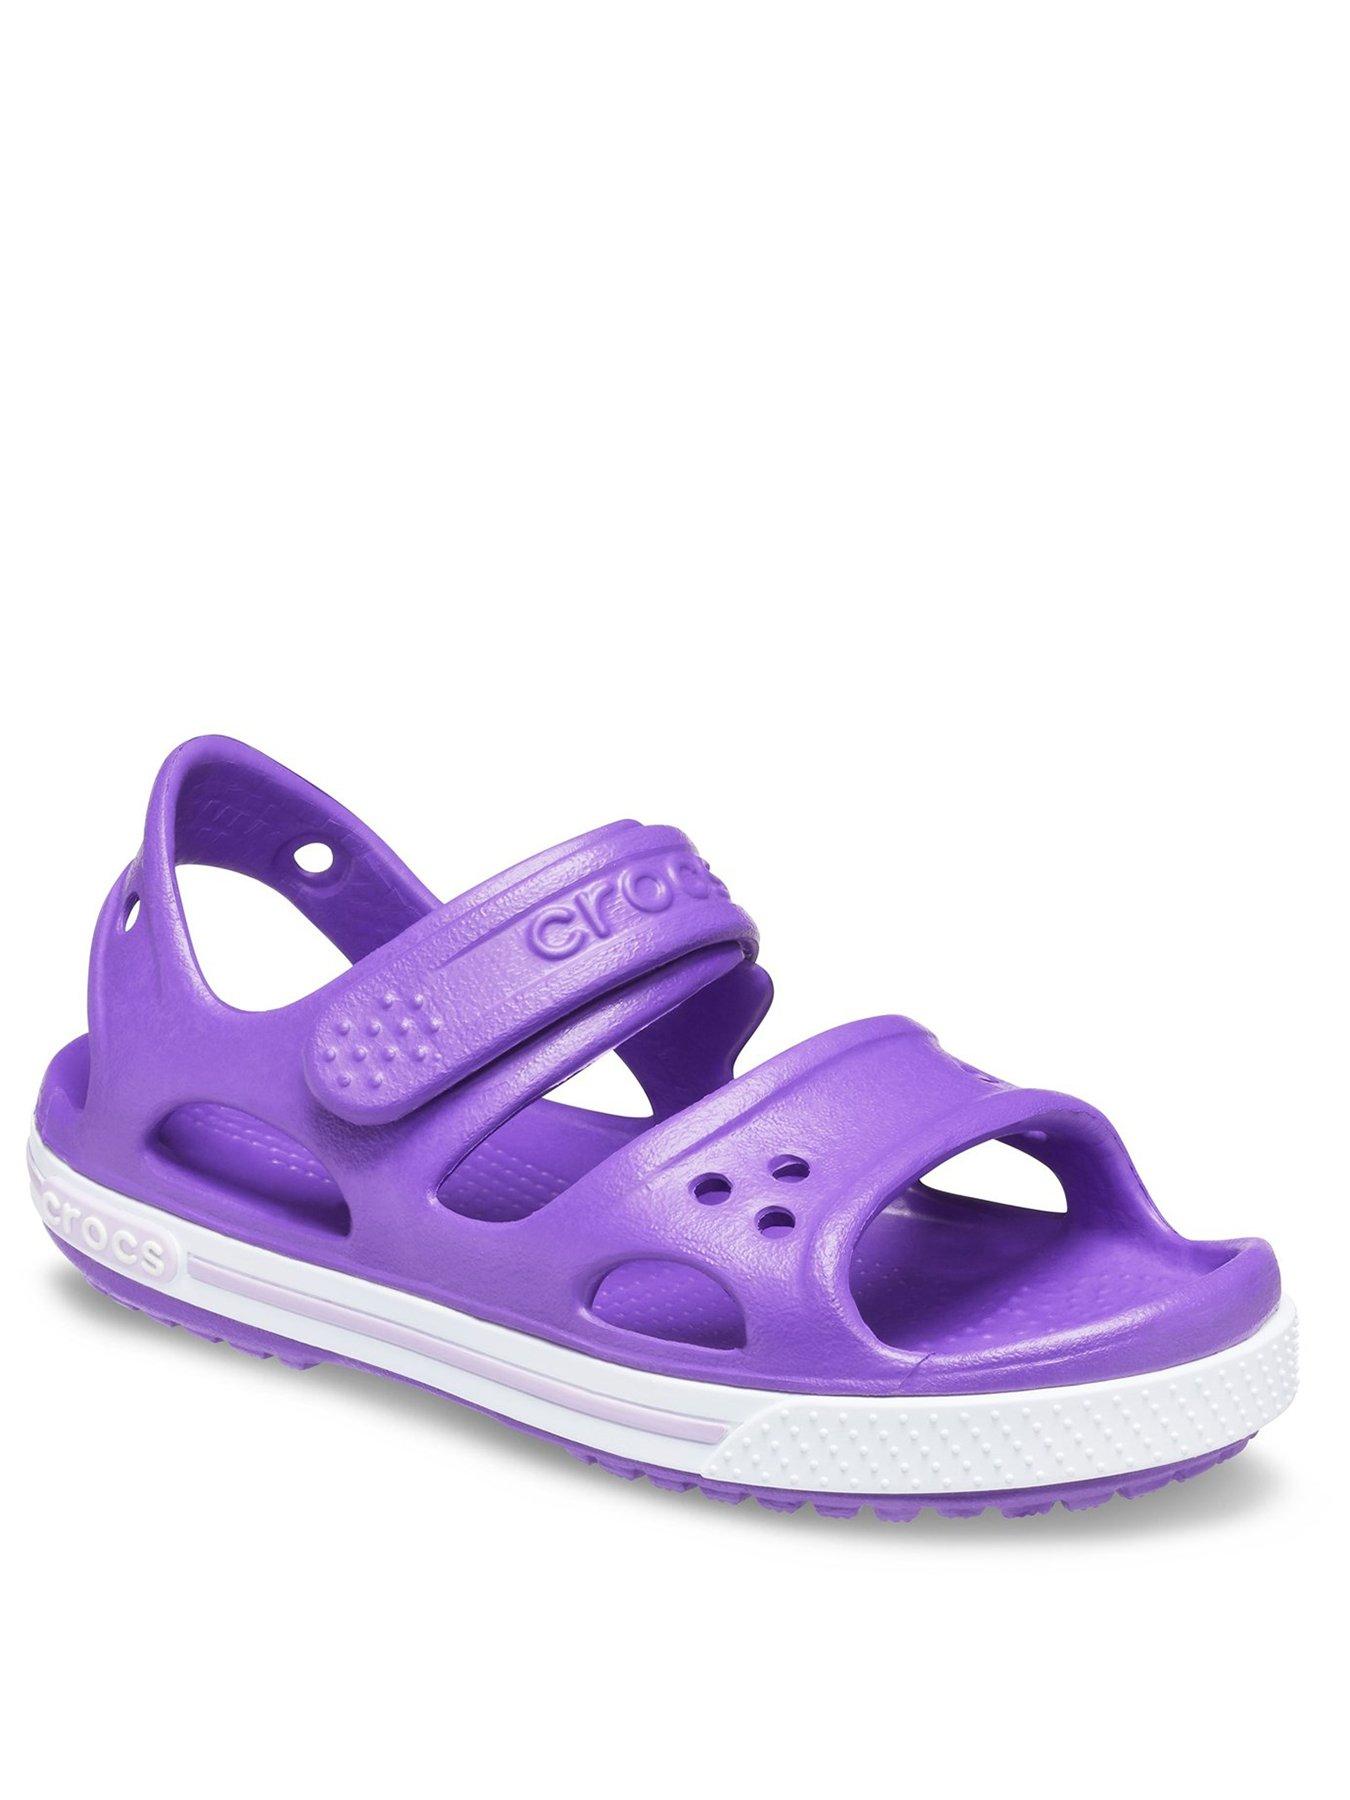 Kids Girls Crocband Ll Sandals - Purple